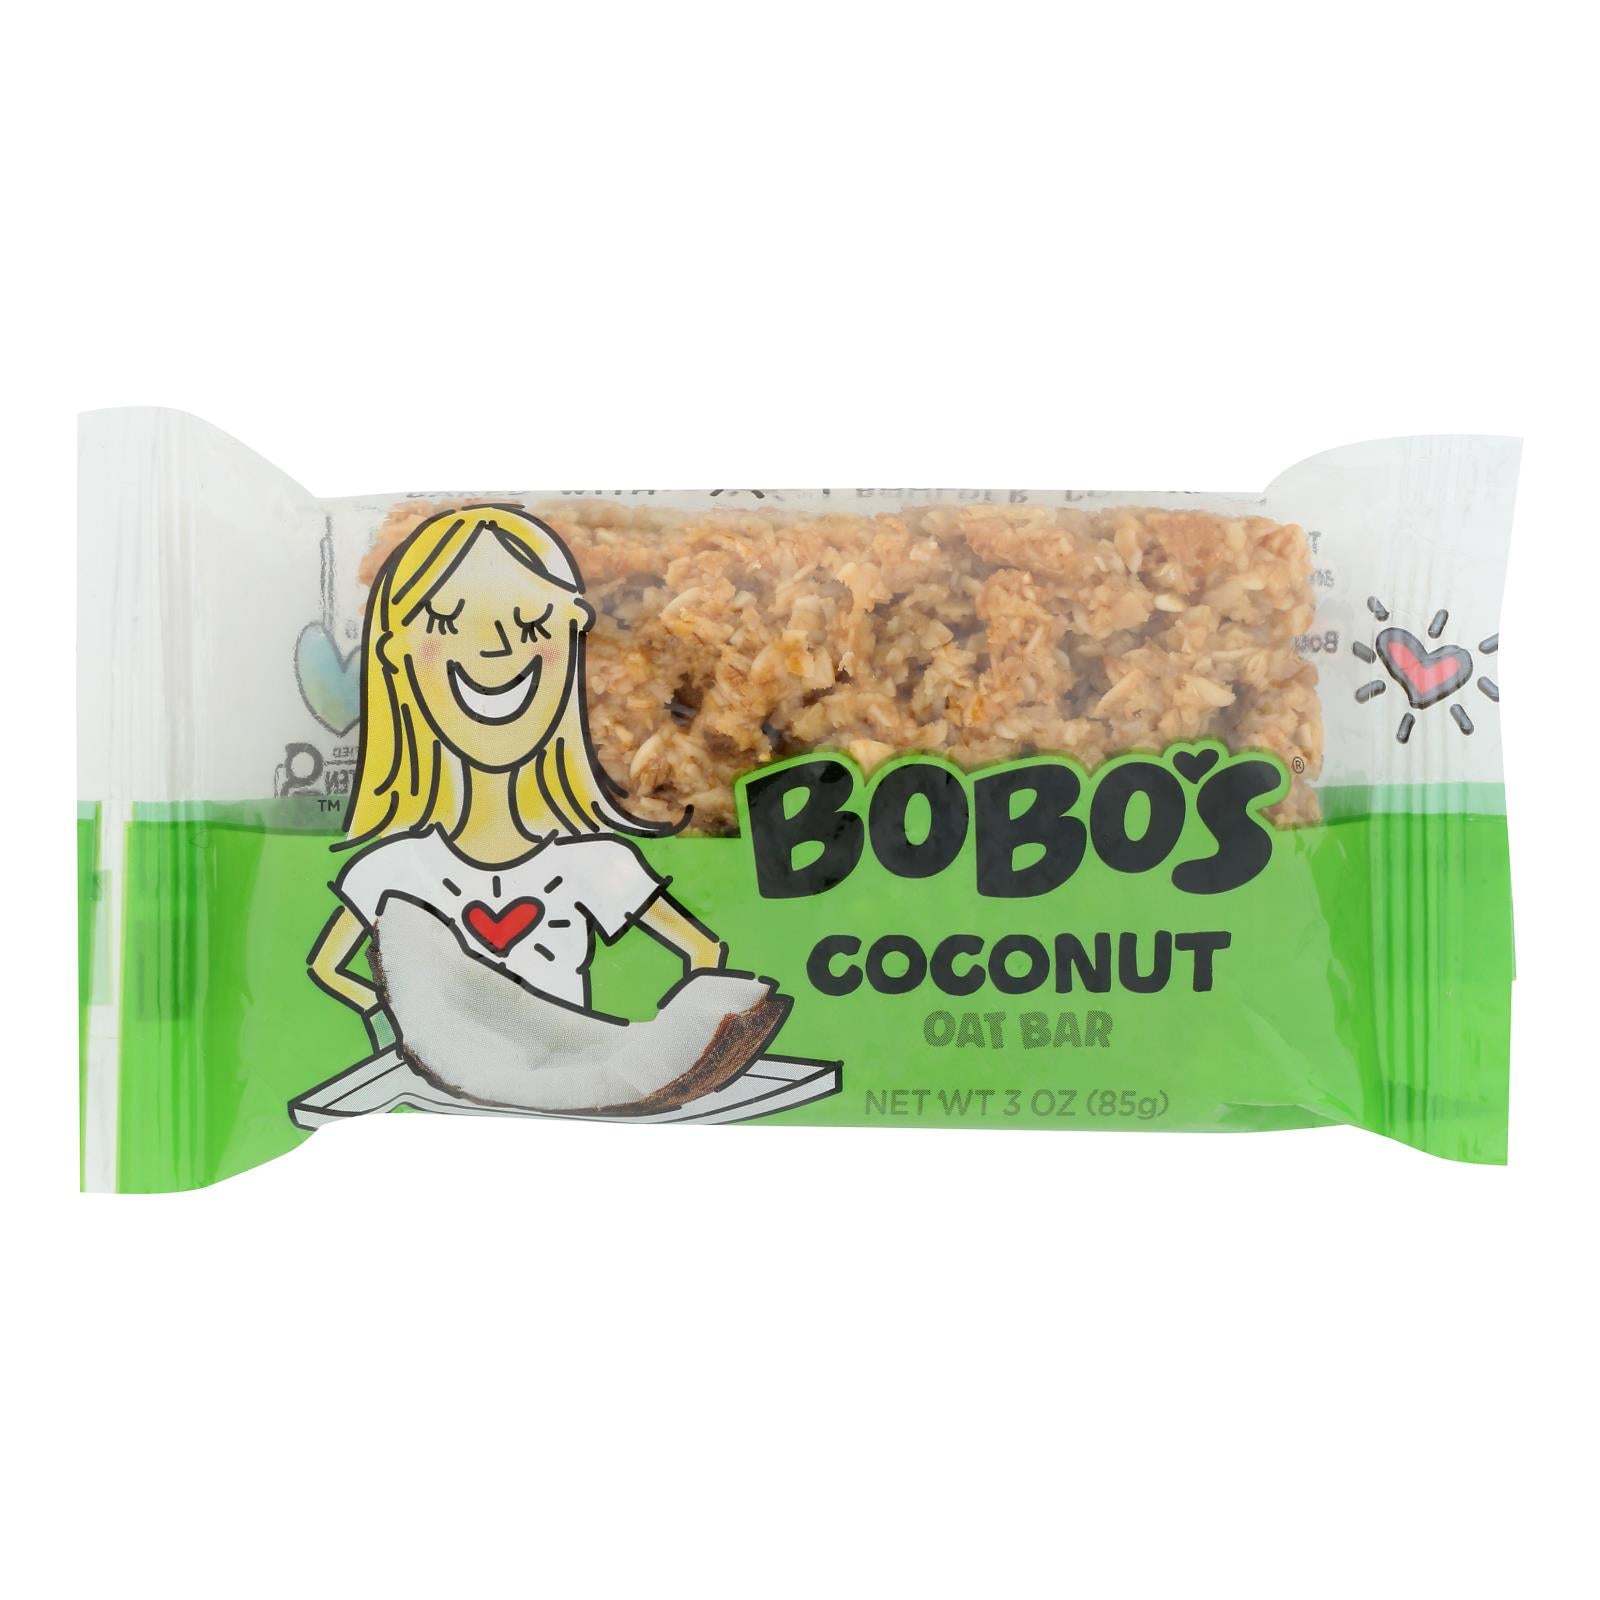 Bobo's Oat Bars - All Natural - Coconut - 3 Oz Bars - Case Of 12